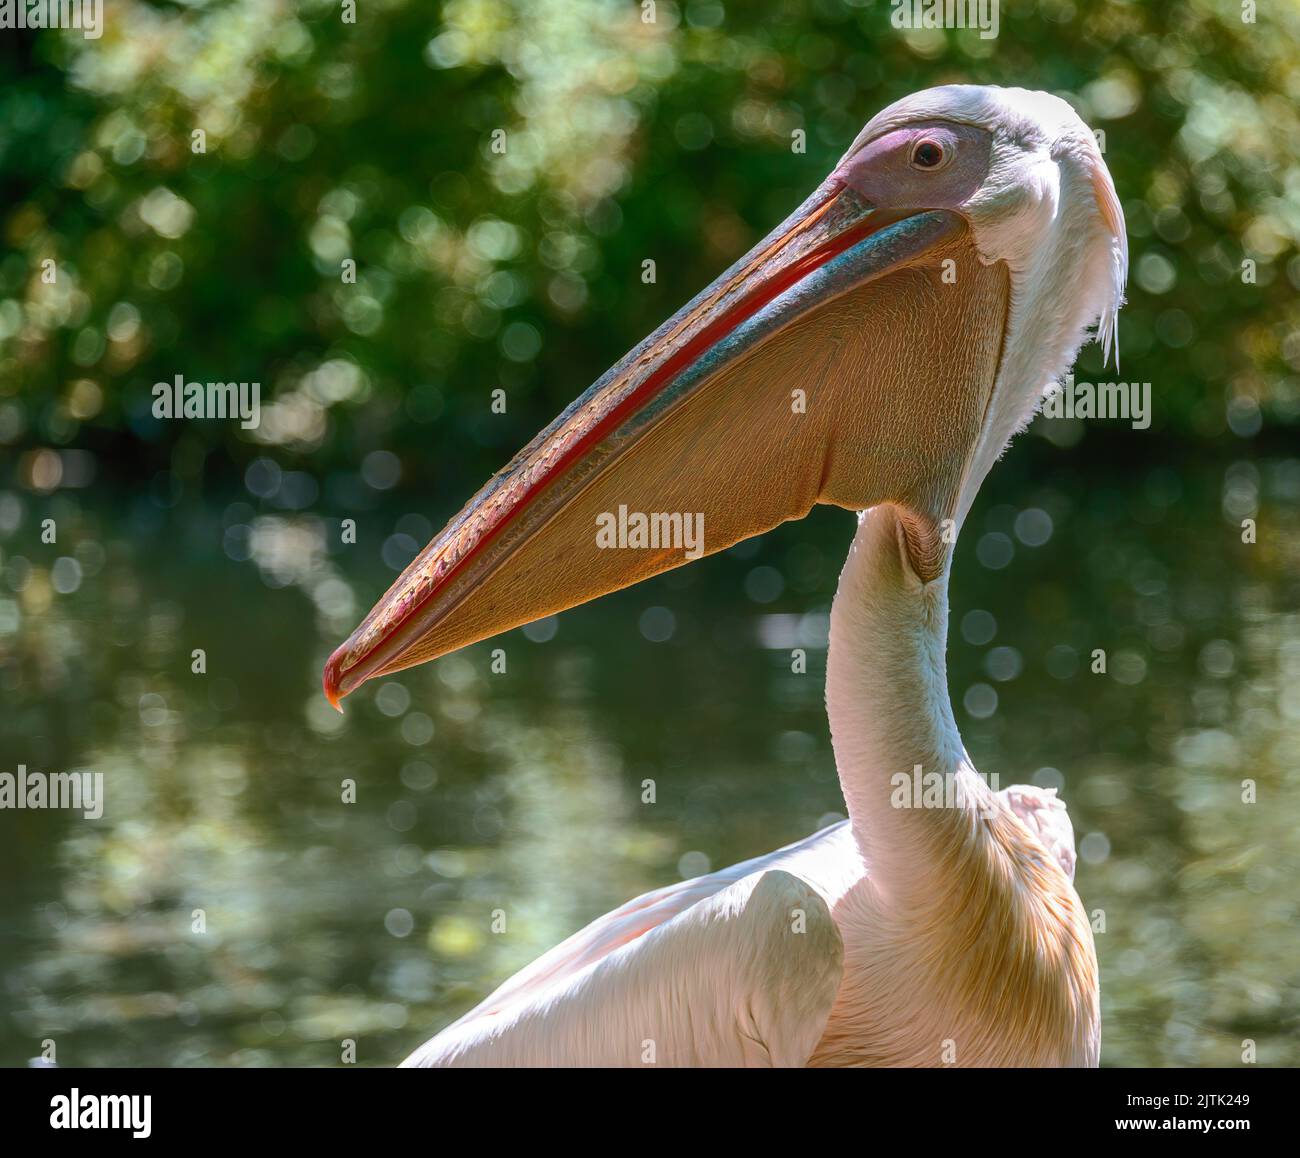 Portrait of a pelican bird Stock Photo